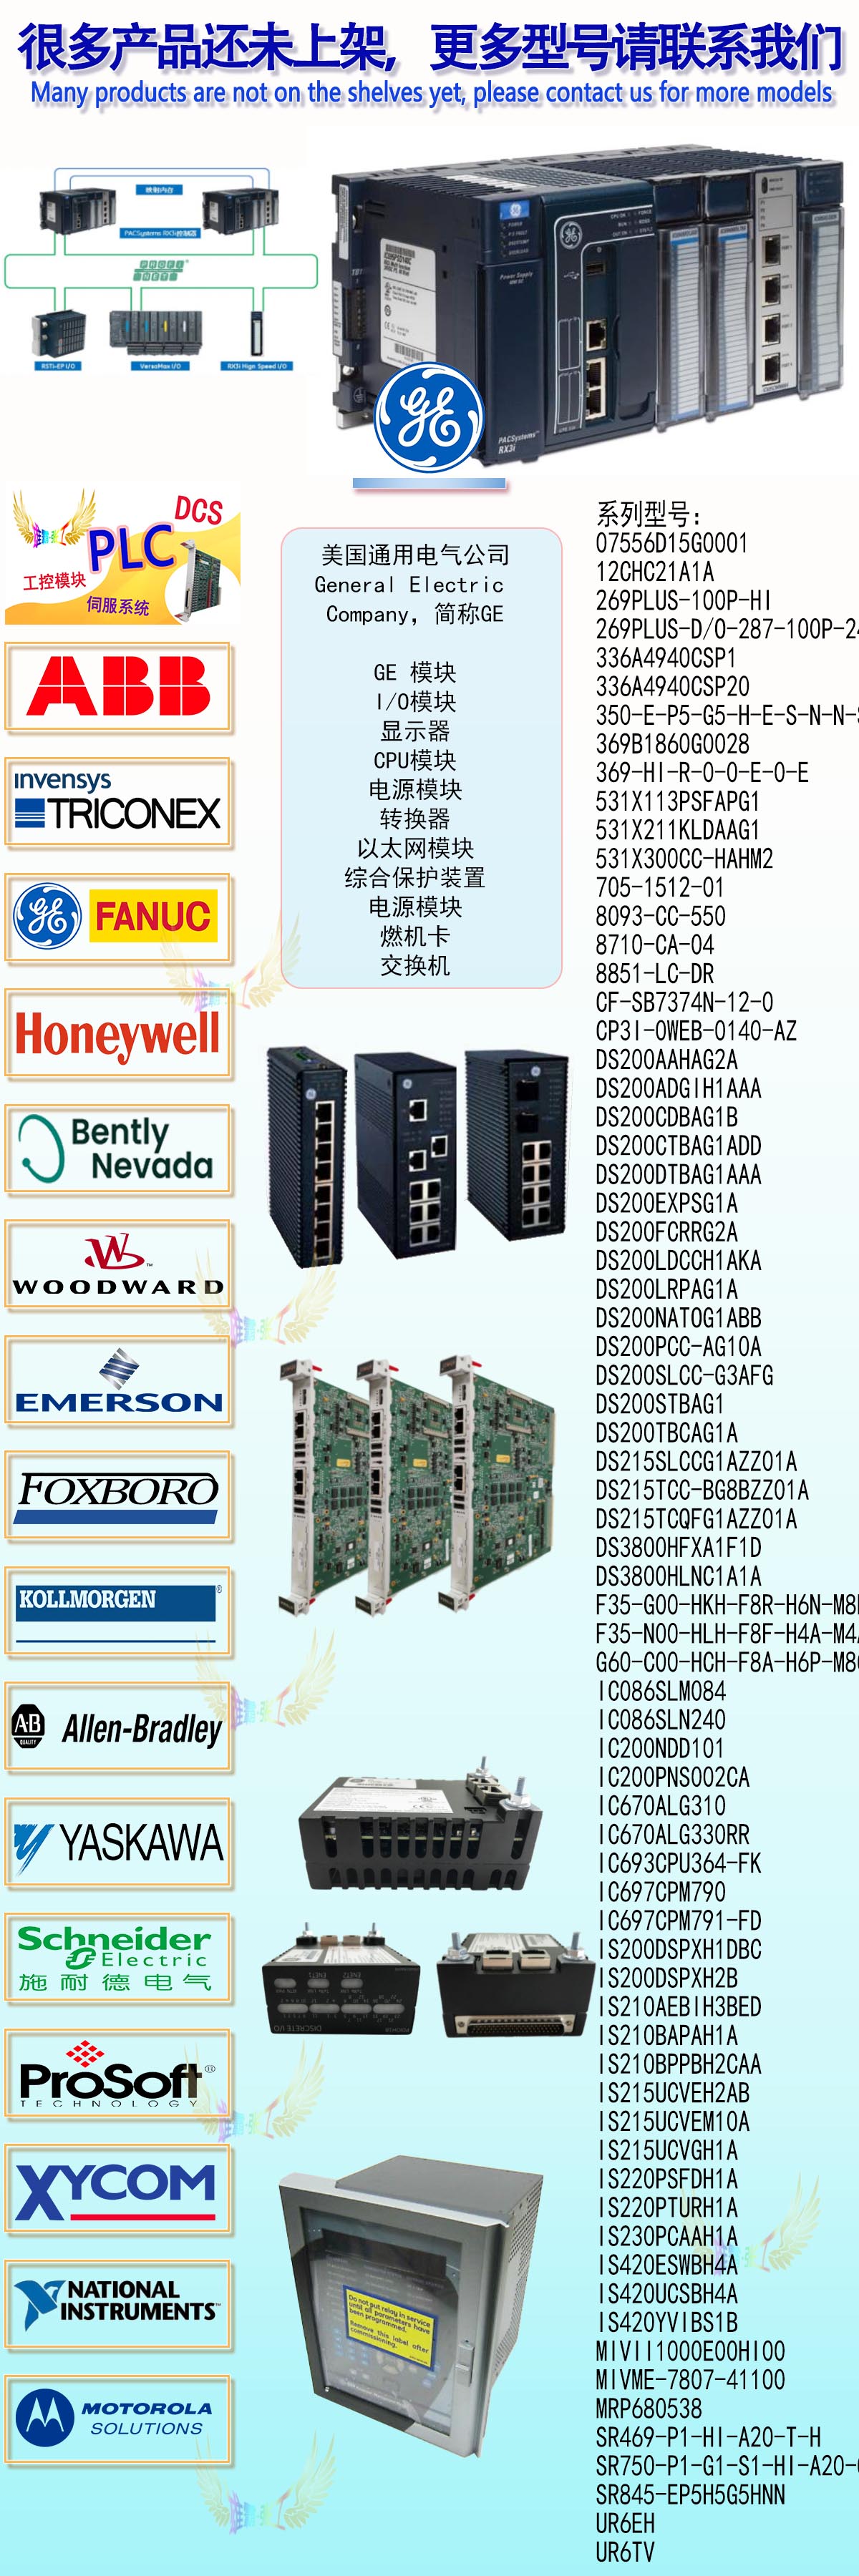 GE通用自动化 531X122PCNAJG1控制器，电源模块，PLC/DCS 